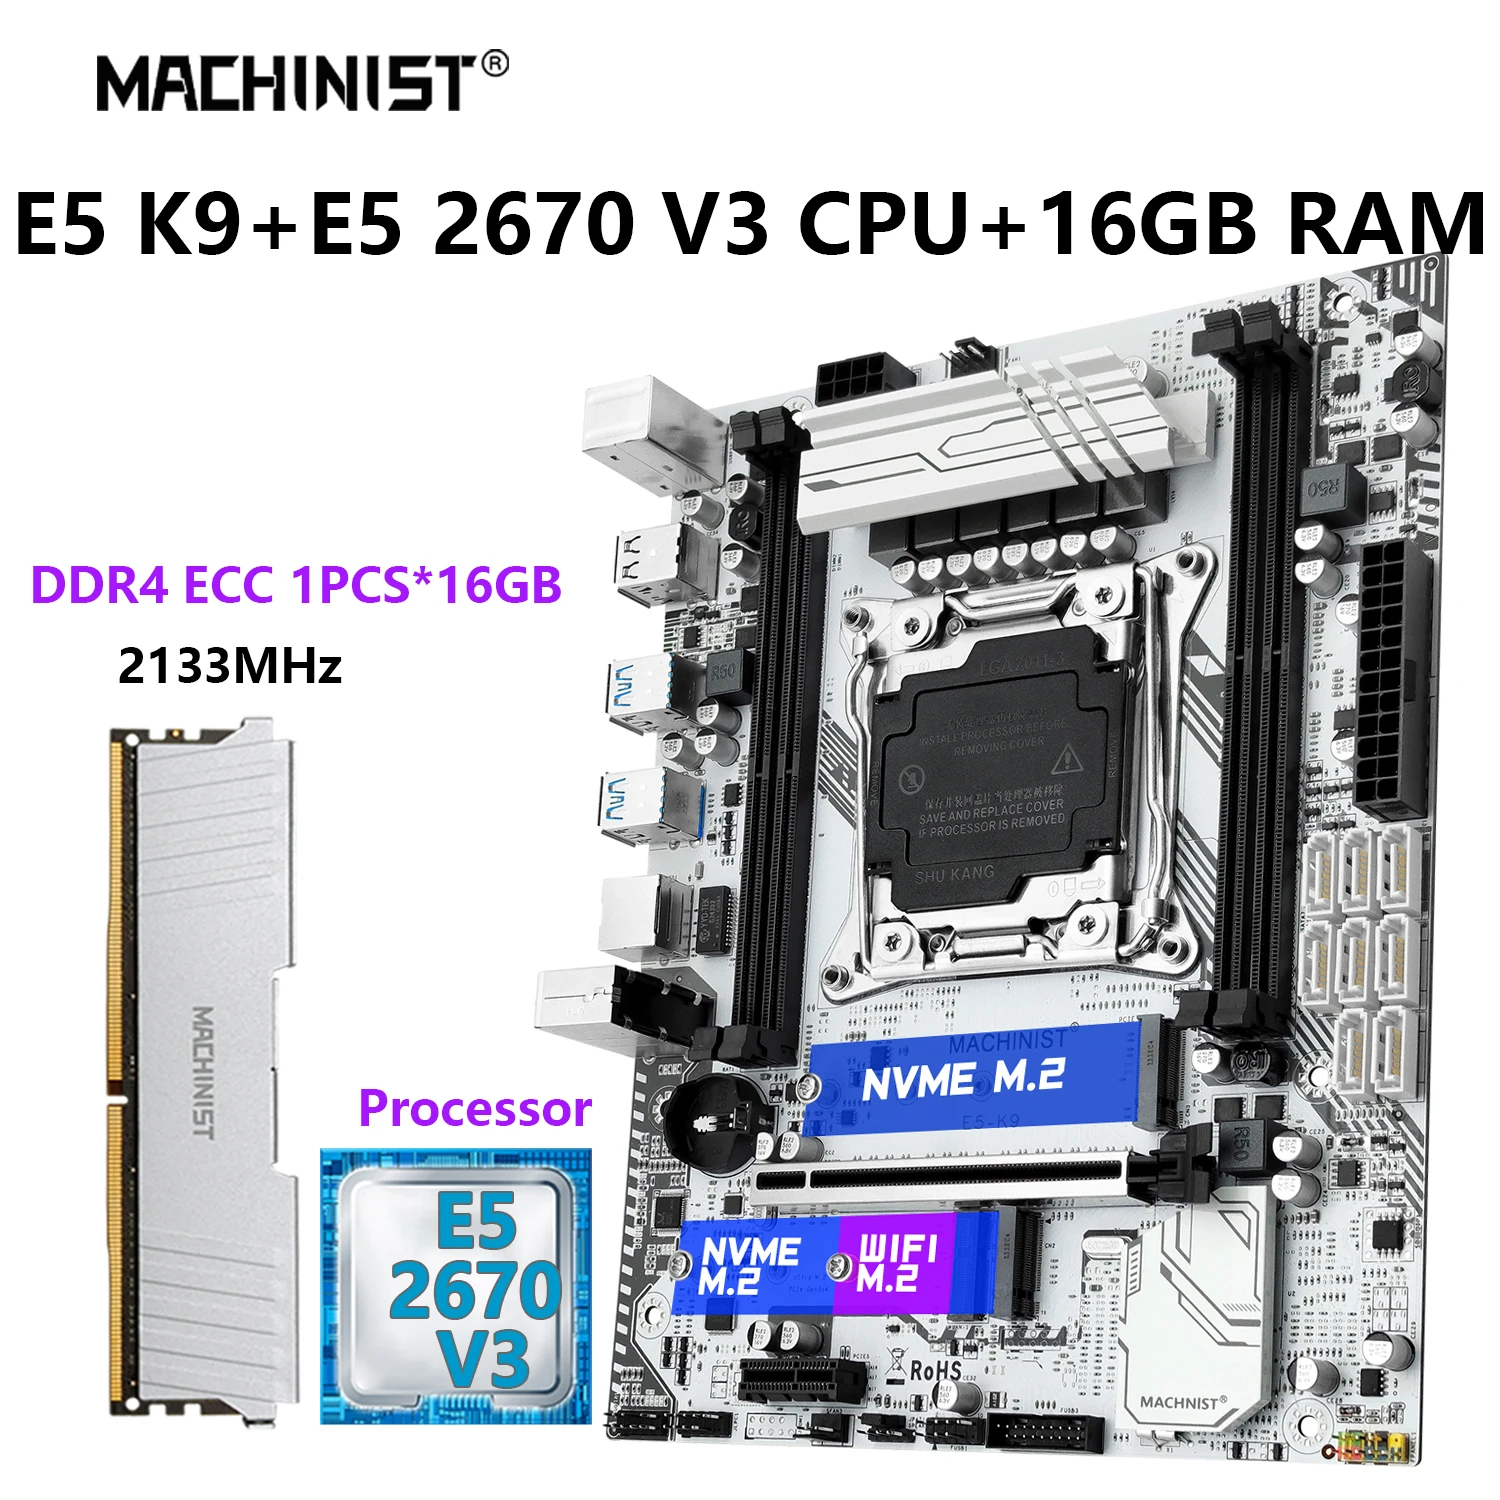 

MACHINIS комплект X99 k9 материнская плата LGA 2011-3 комплект процессора Intel Xeon E5 2670 V3 ЦП ecc 16 Гб DDR4 ПАМЯТЬ Combo nvme m.2 USB3.0